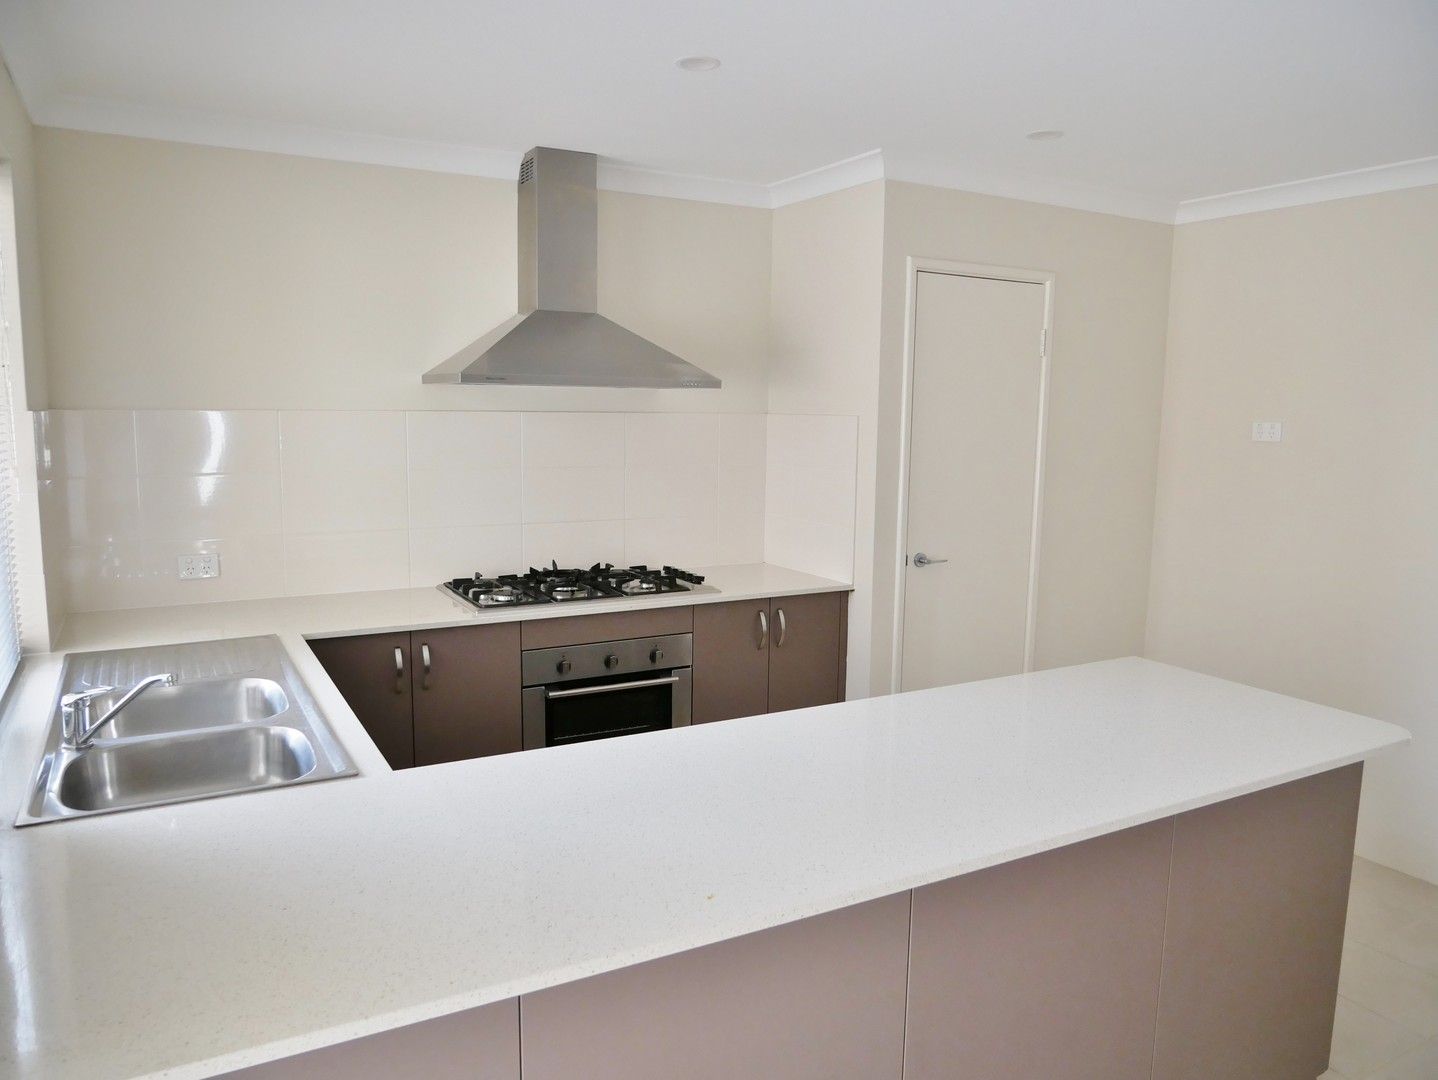 4 bedrooms House in 116B Fremantle Road GOSNELLS WA, 6110